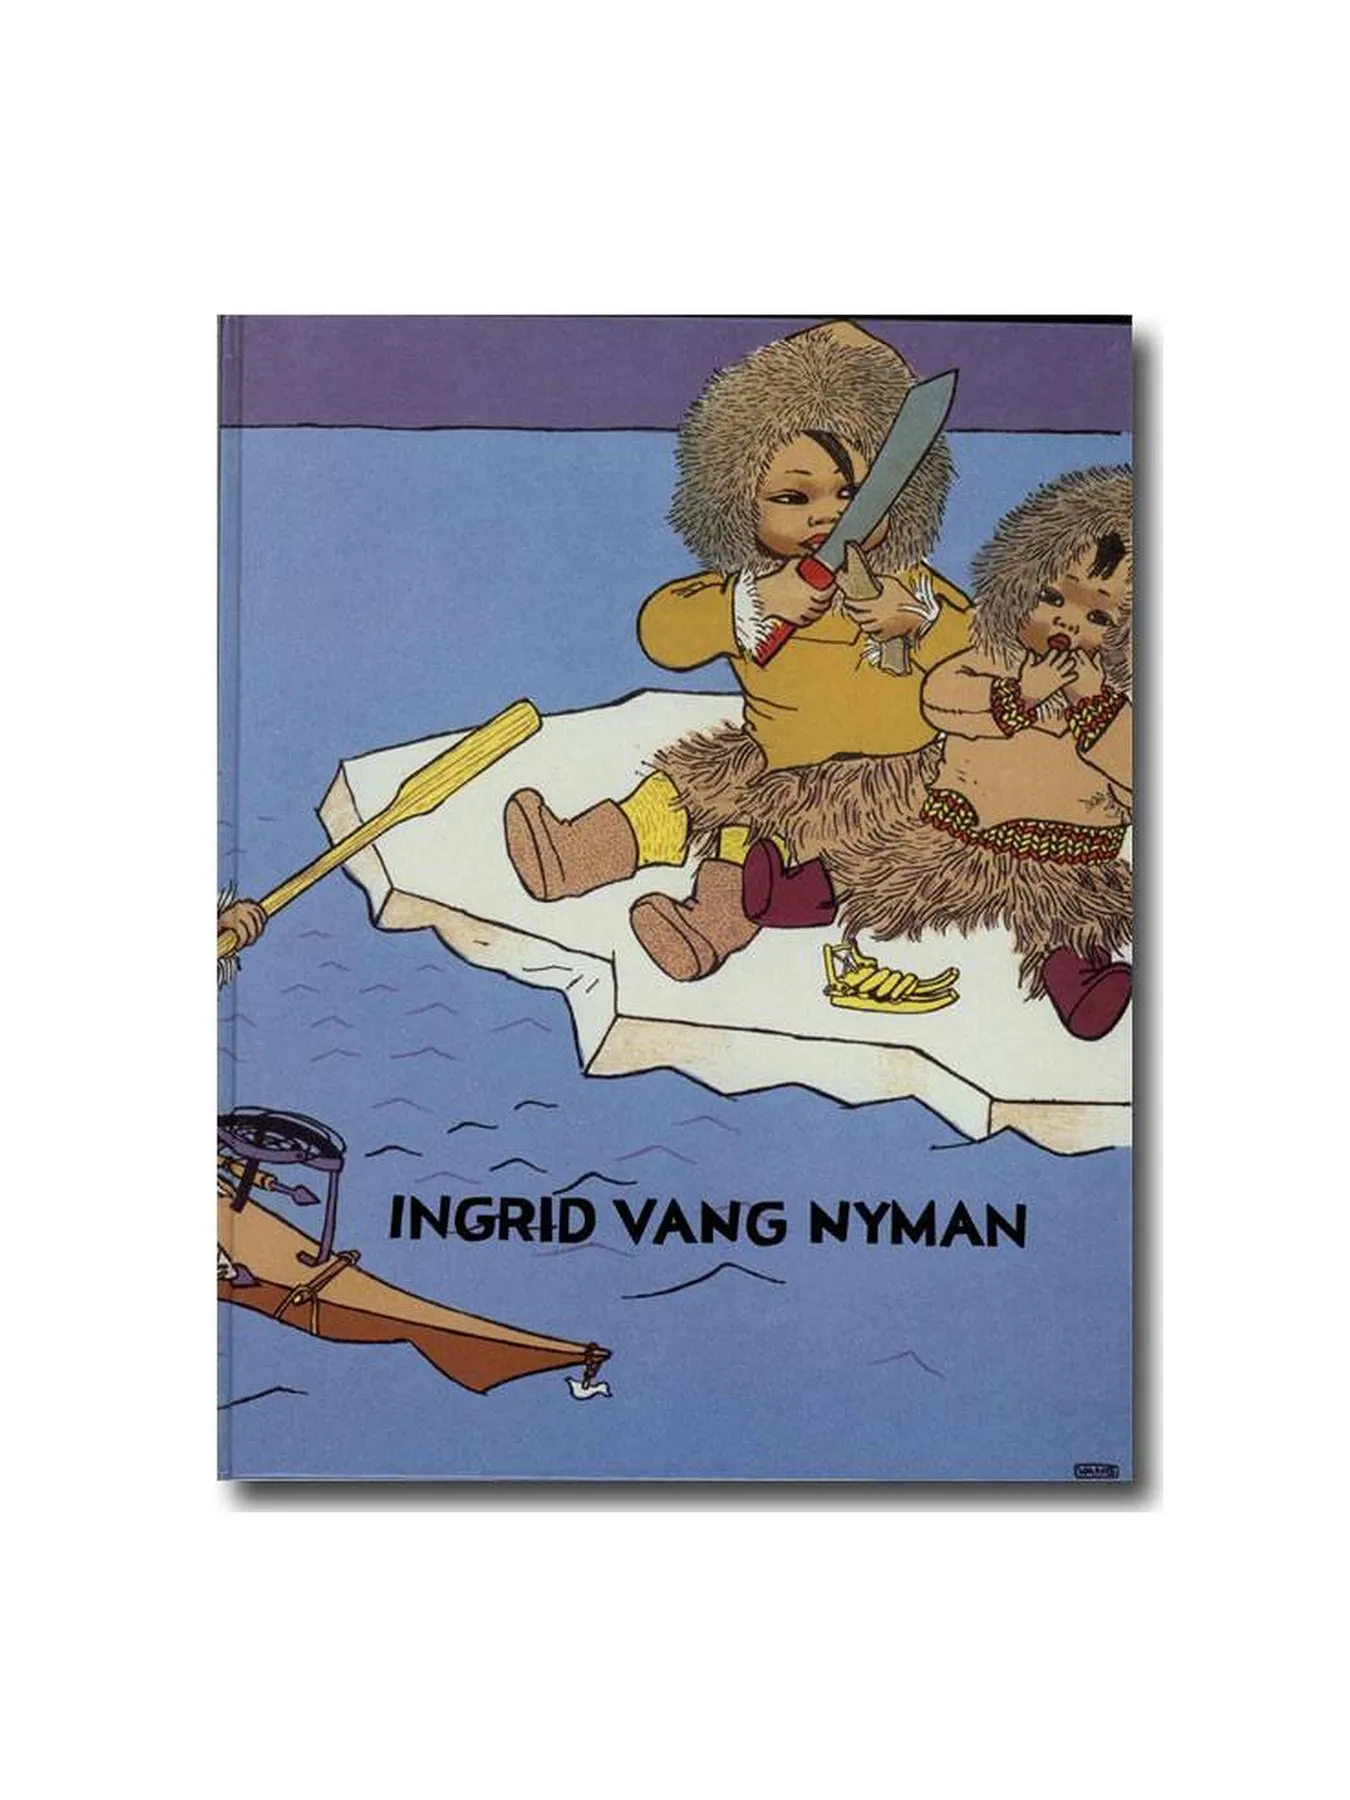 Exhibition catalogue - Ingrid Vang Nyman